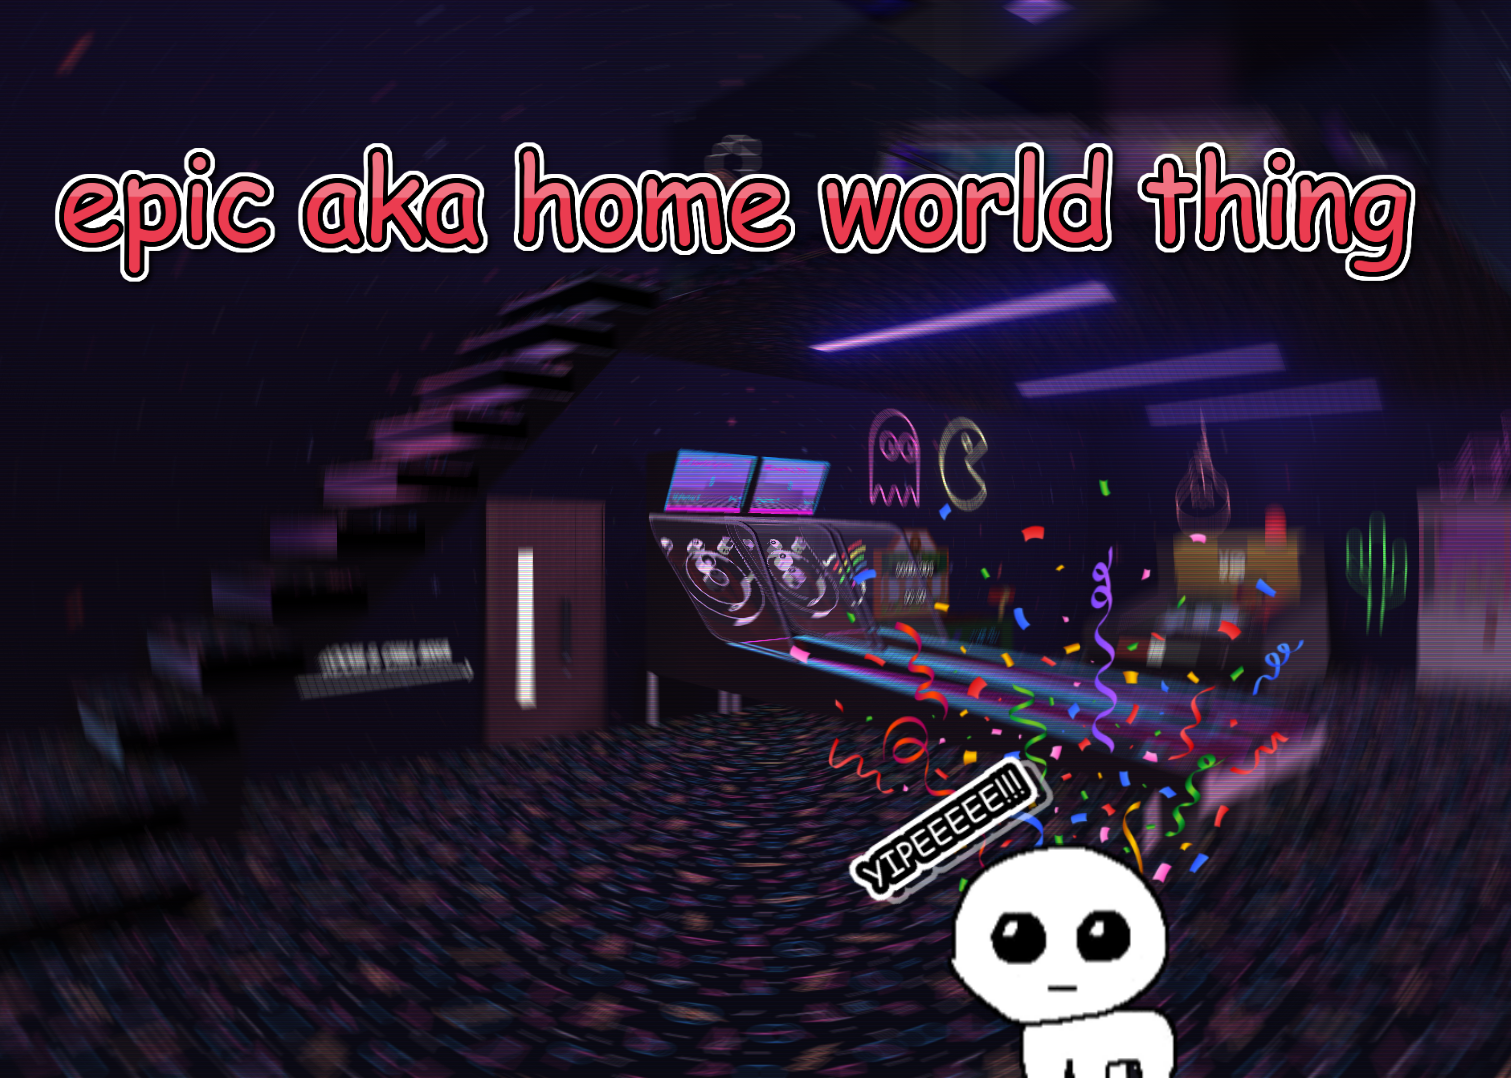 Aka's Arcade Home